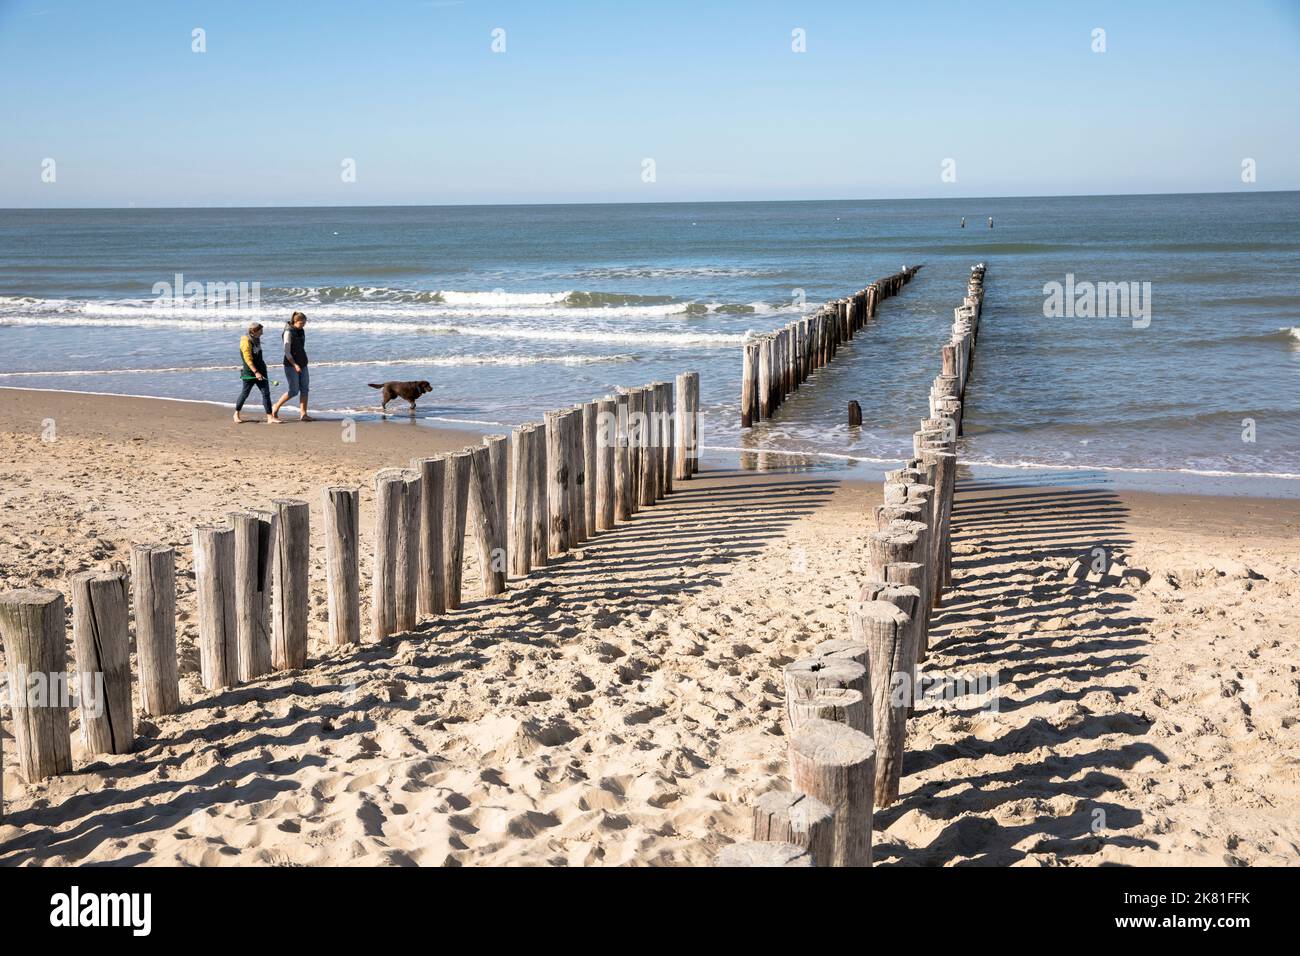 Inguine sulla spiaggia di Domburg sulla penisola Walcheren, Zeeland, Paesi Bassi. Buhnen am Strand von Domburg auf Walcheren, Zeeland, Niederlande. Foto Stock